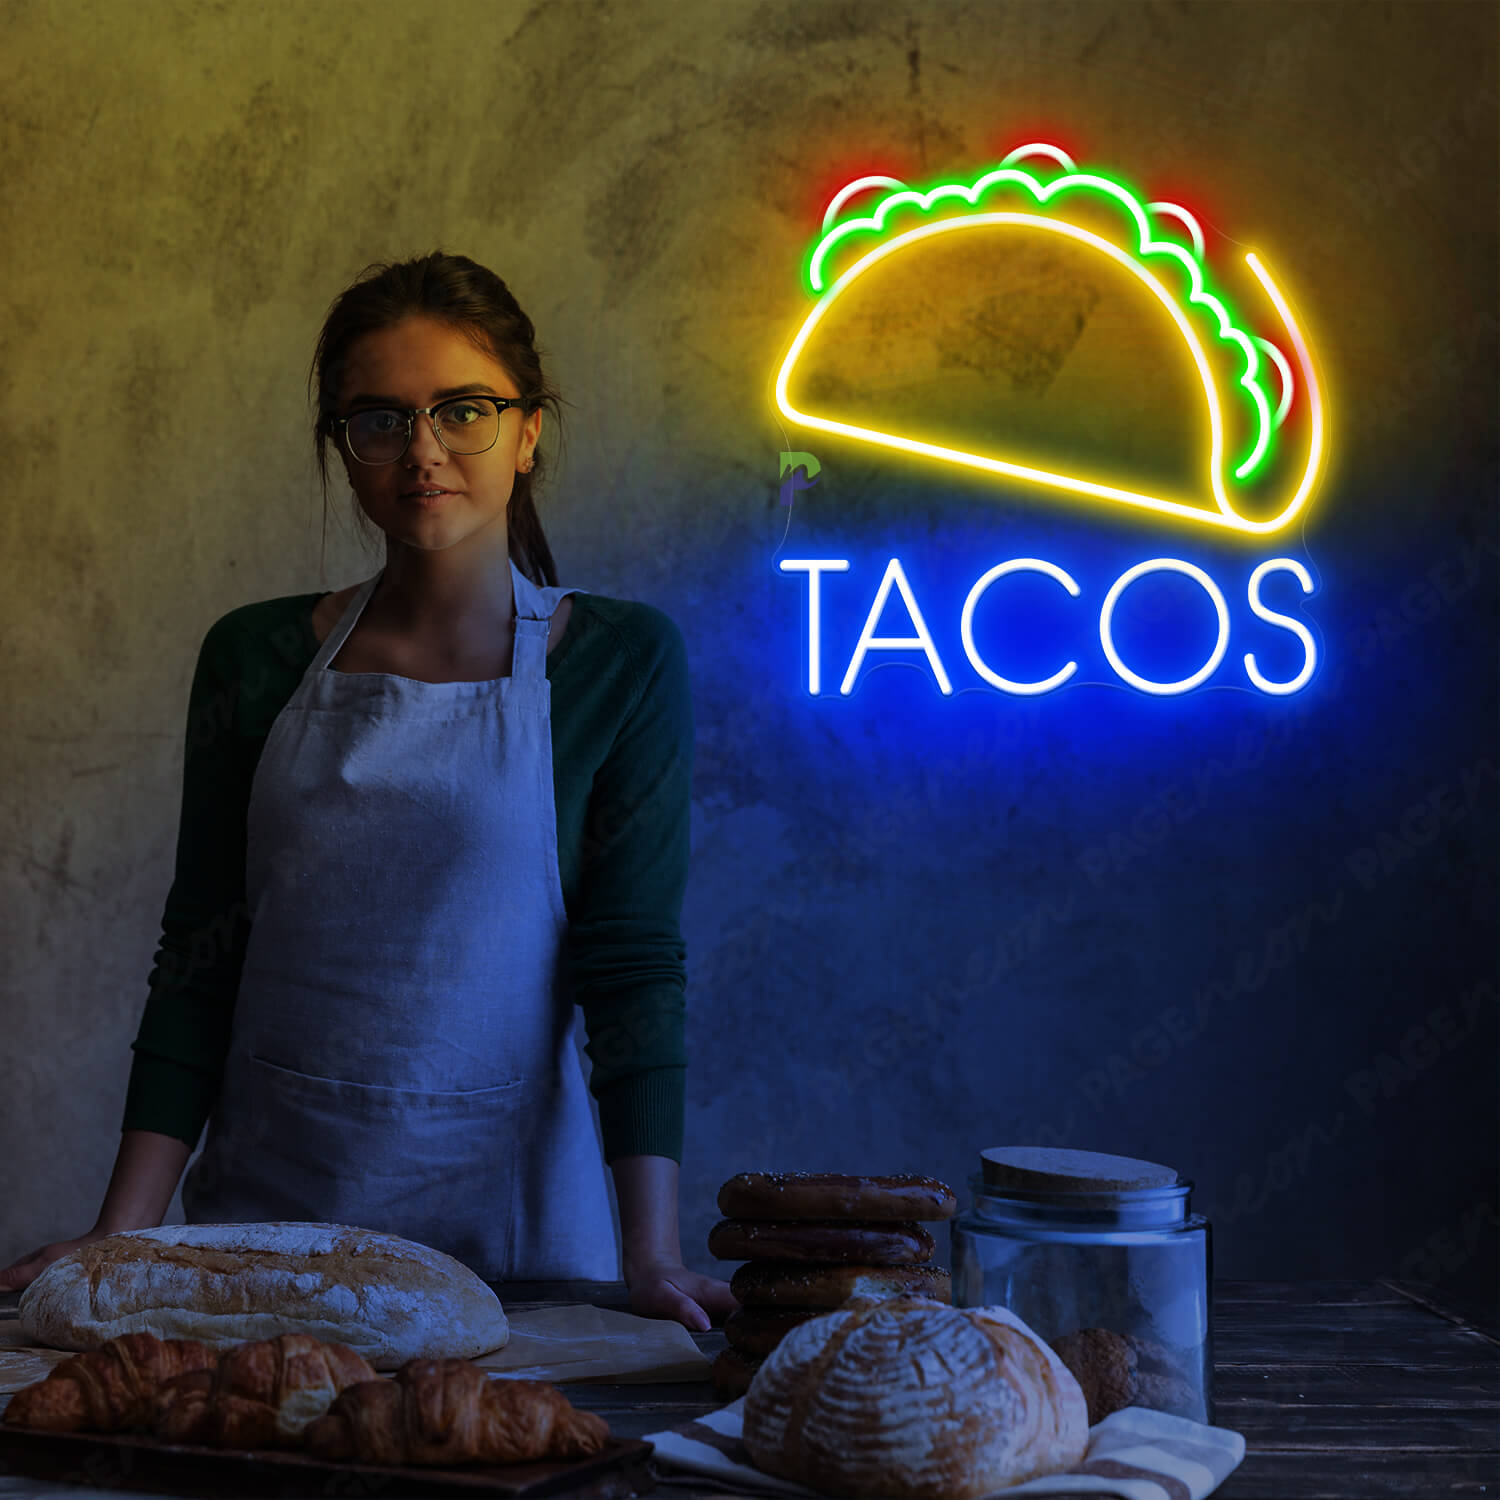 Neon Taco Sign Mexico Restaurant Led Light Blue